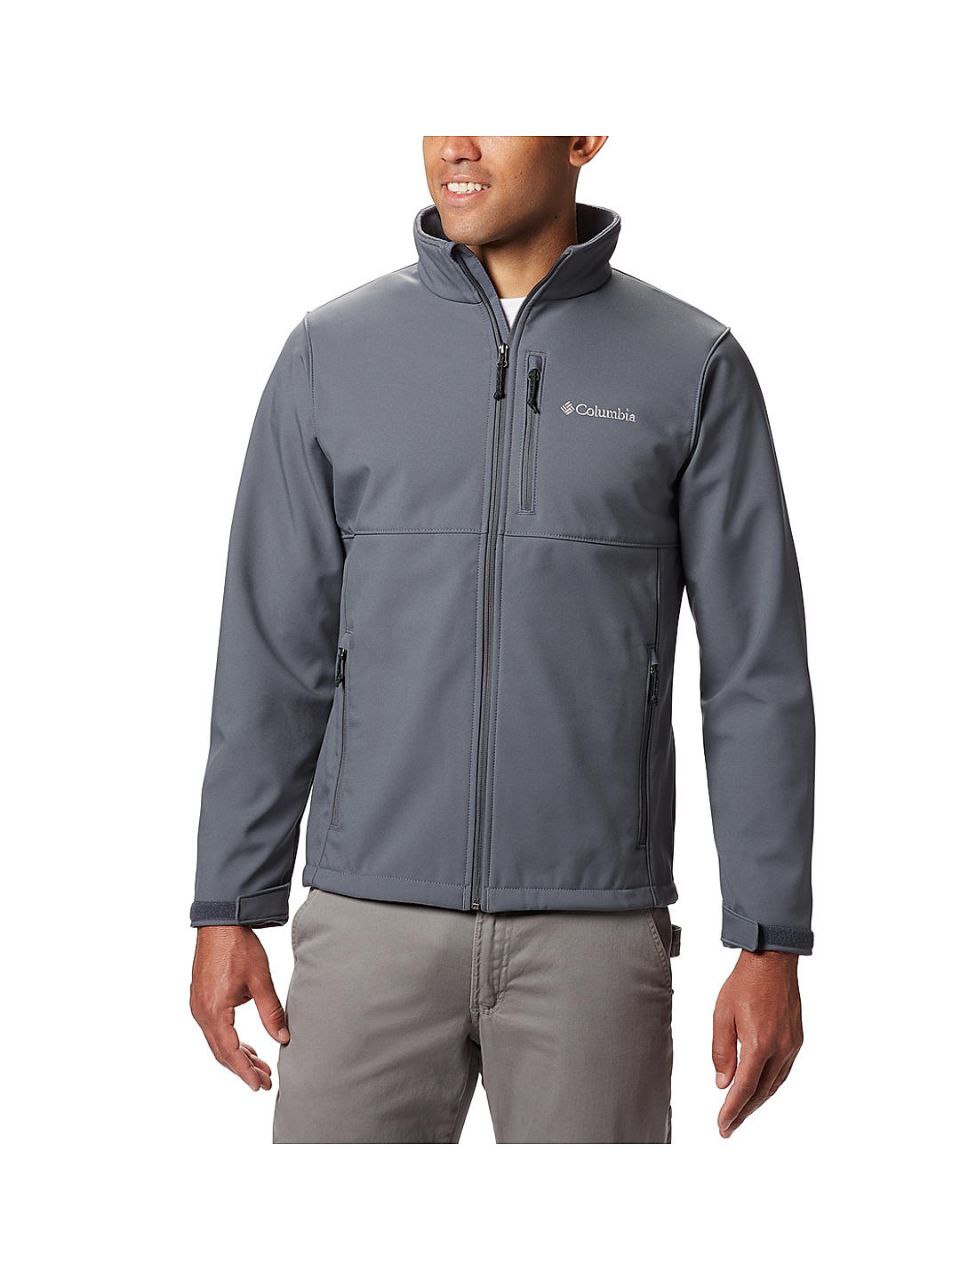 Cascade Ridge Softshell Jacket - Your Ultimate Outdoor